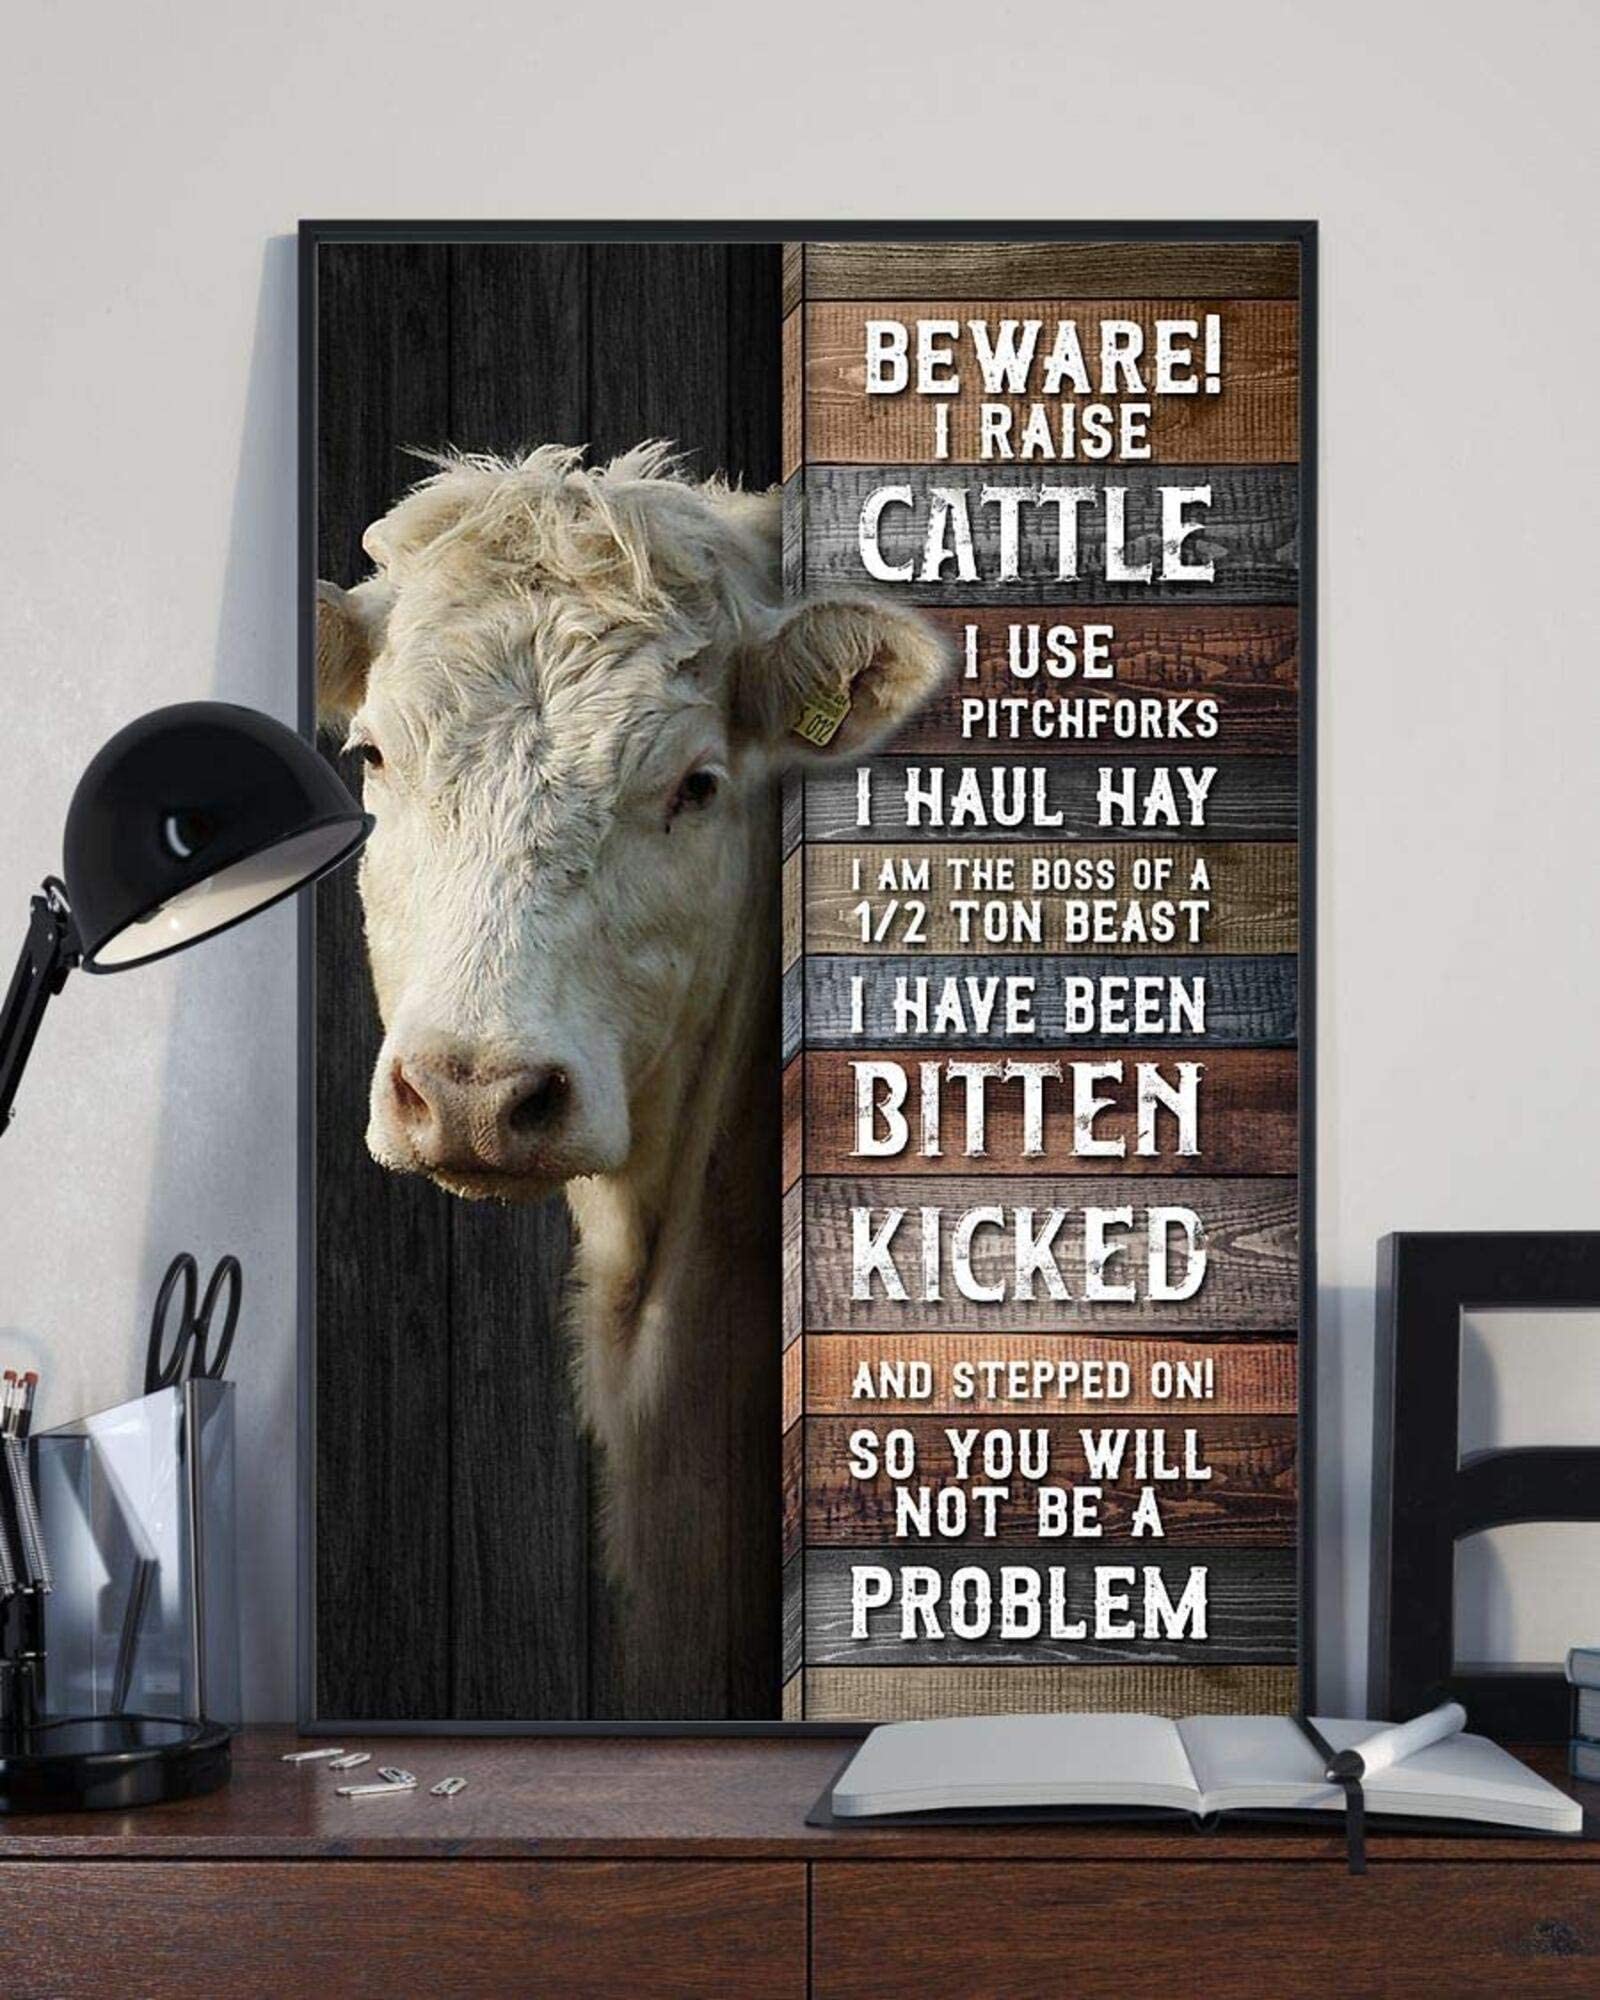 Beware I Raise Cattle Pitchforks Haul Hay Bitten Kicked Not Be A Problem Cows Brahman